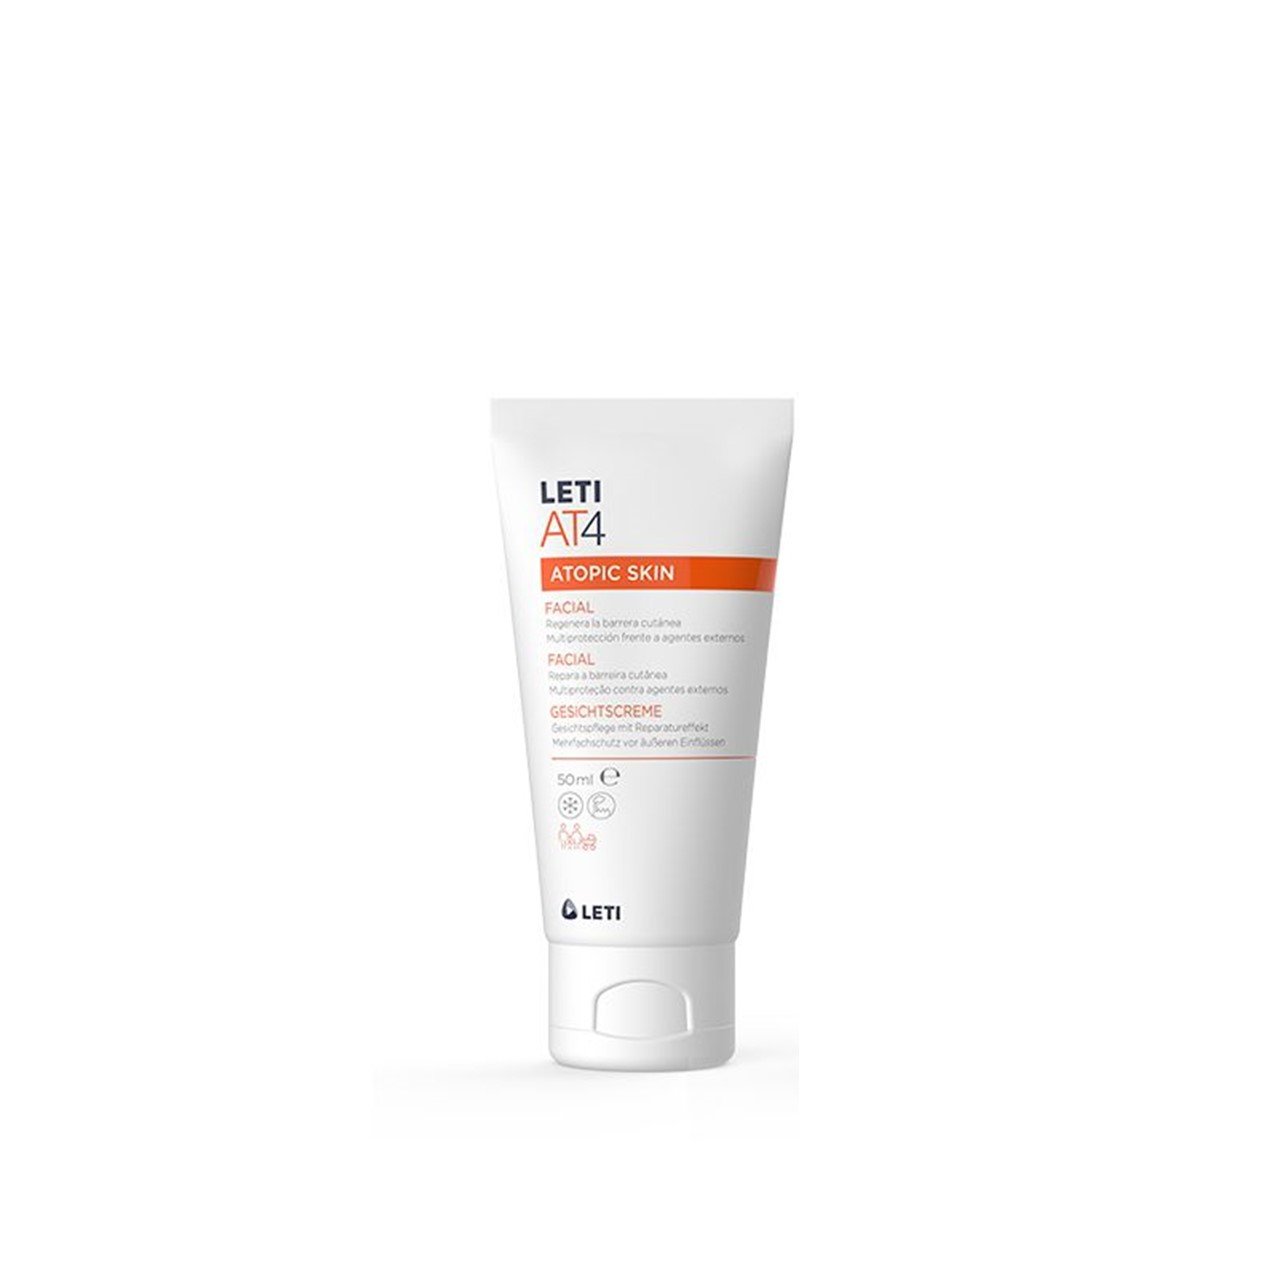 LETI AT4 Atopic Skin Facial Cream 50ml (1.69fl oz)